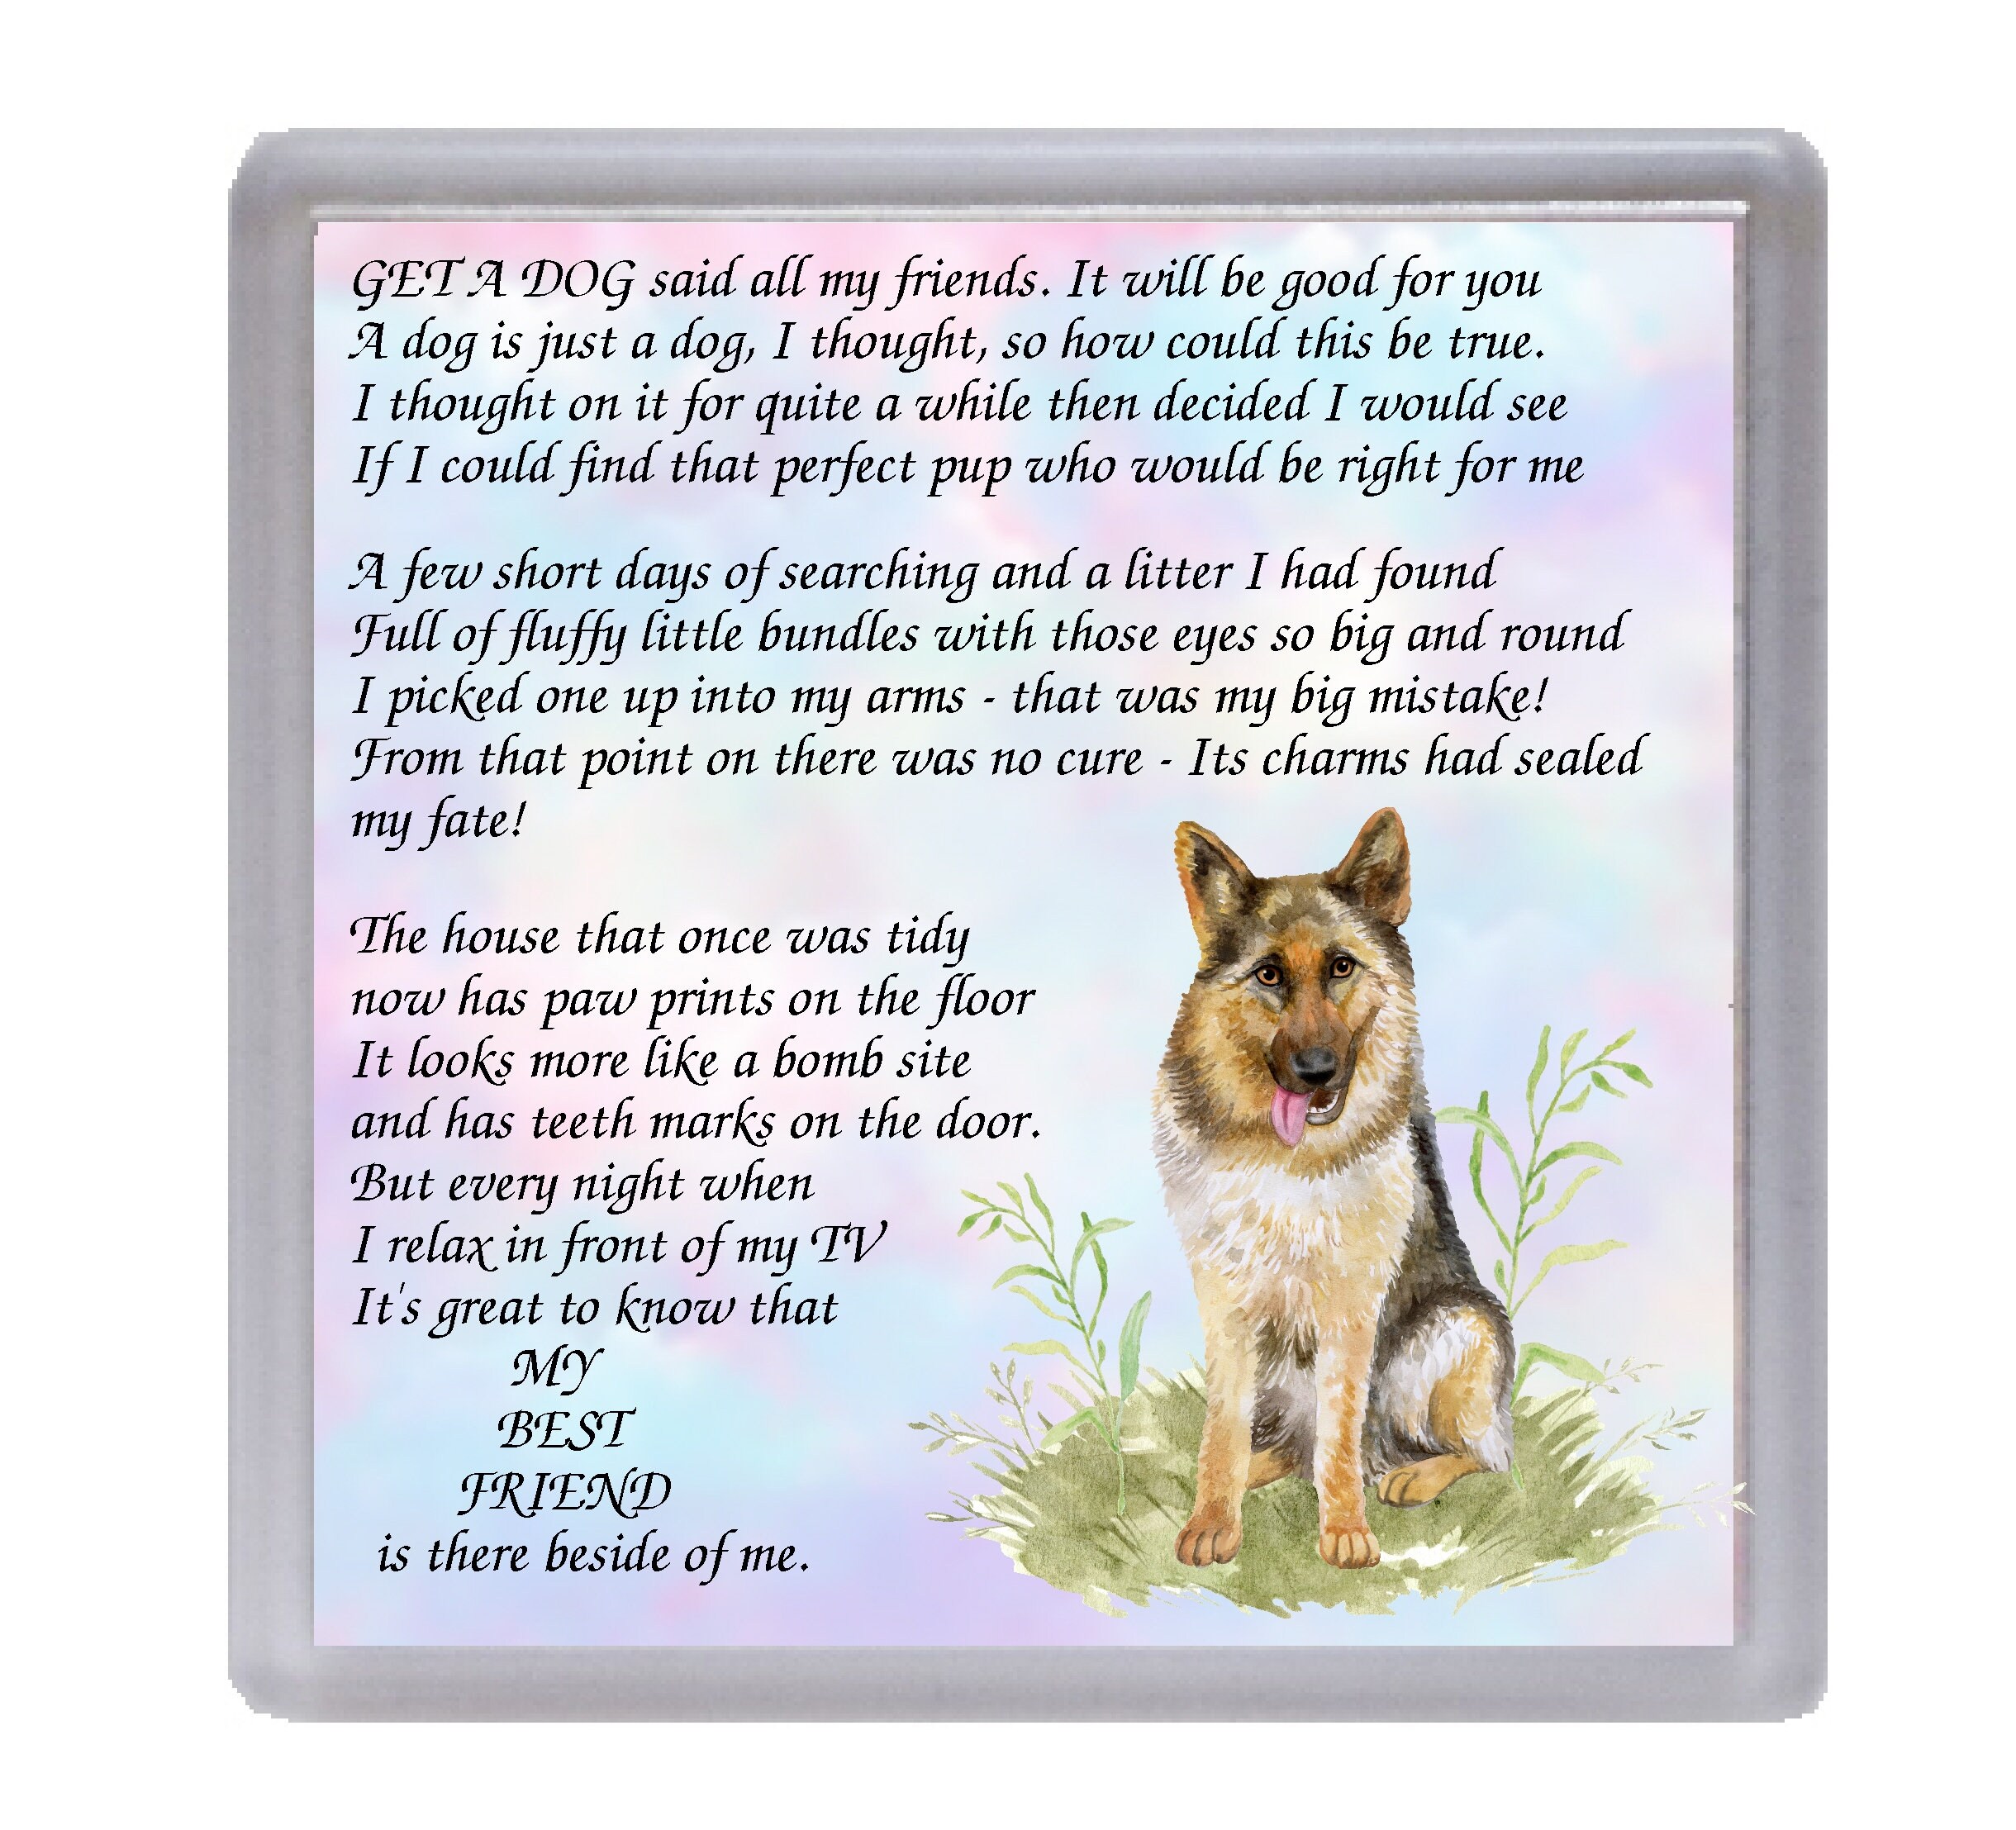 4"x 6" Weimaraner Dog Blank Card/Notelet "Wishing Well" by Starprint 